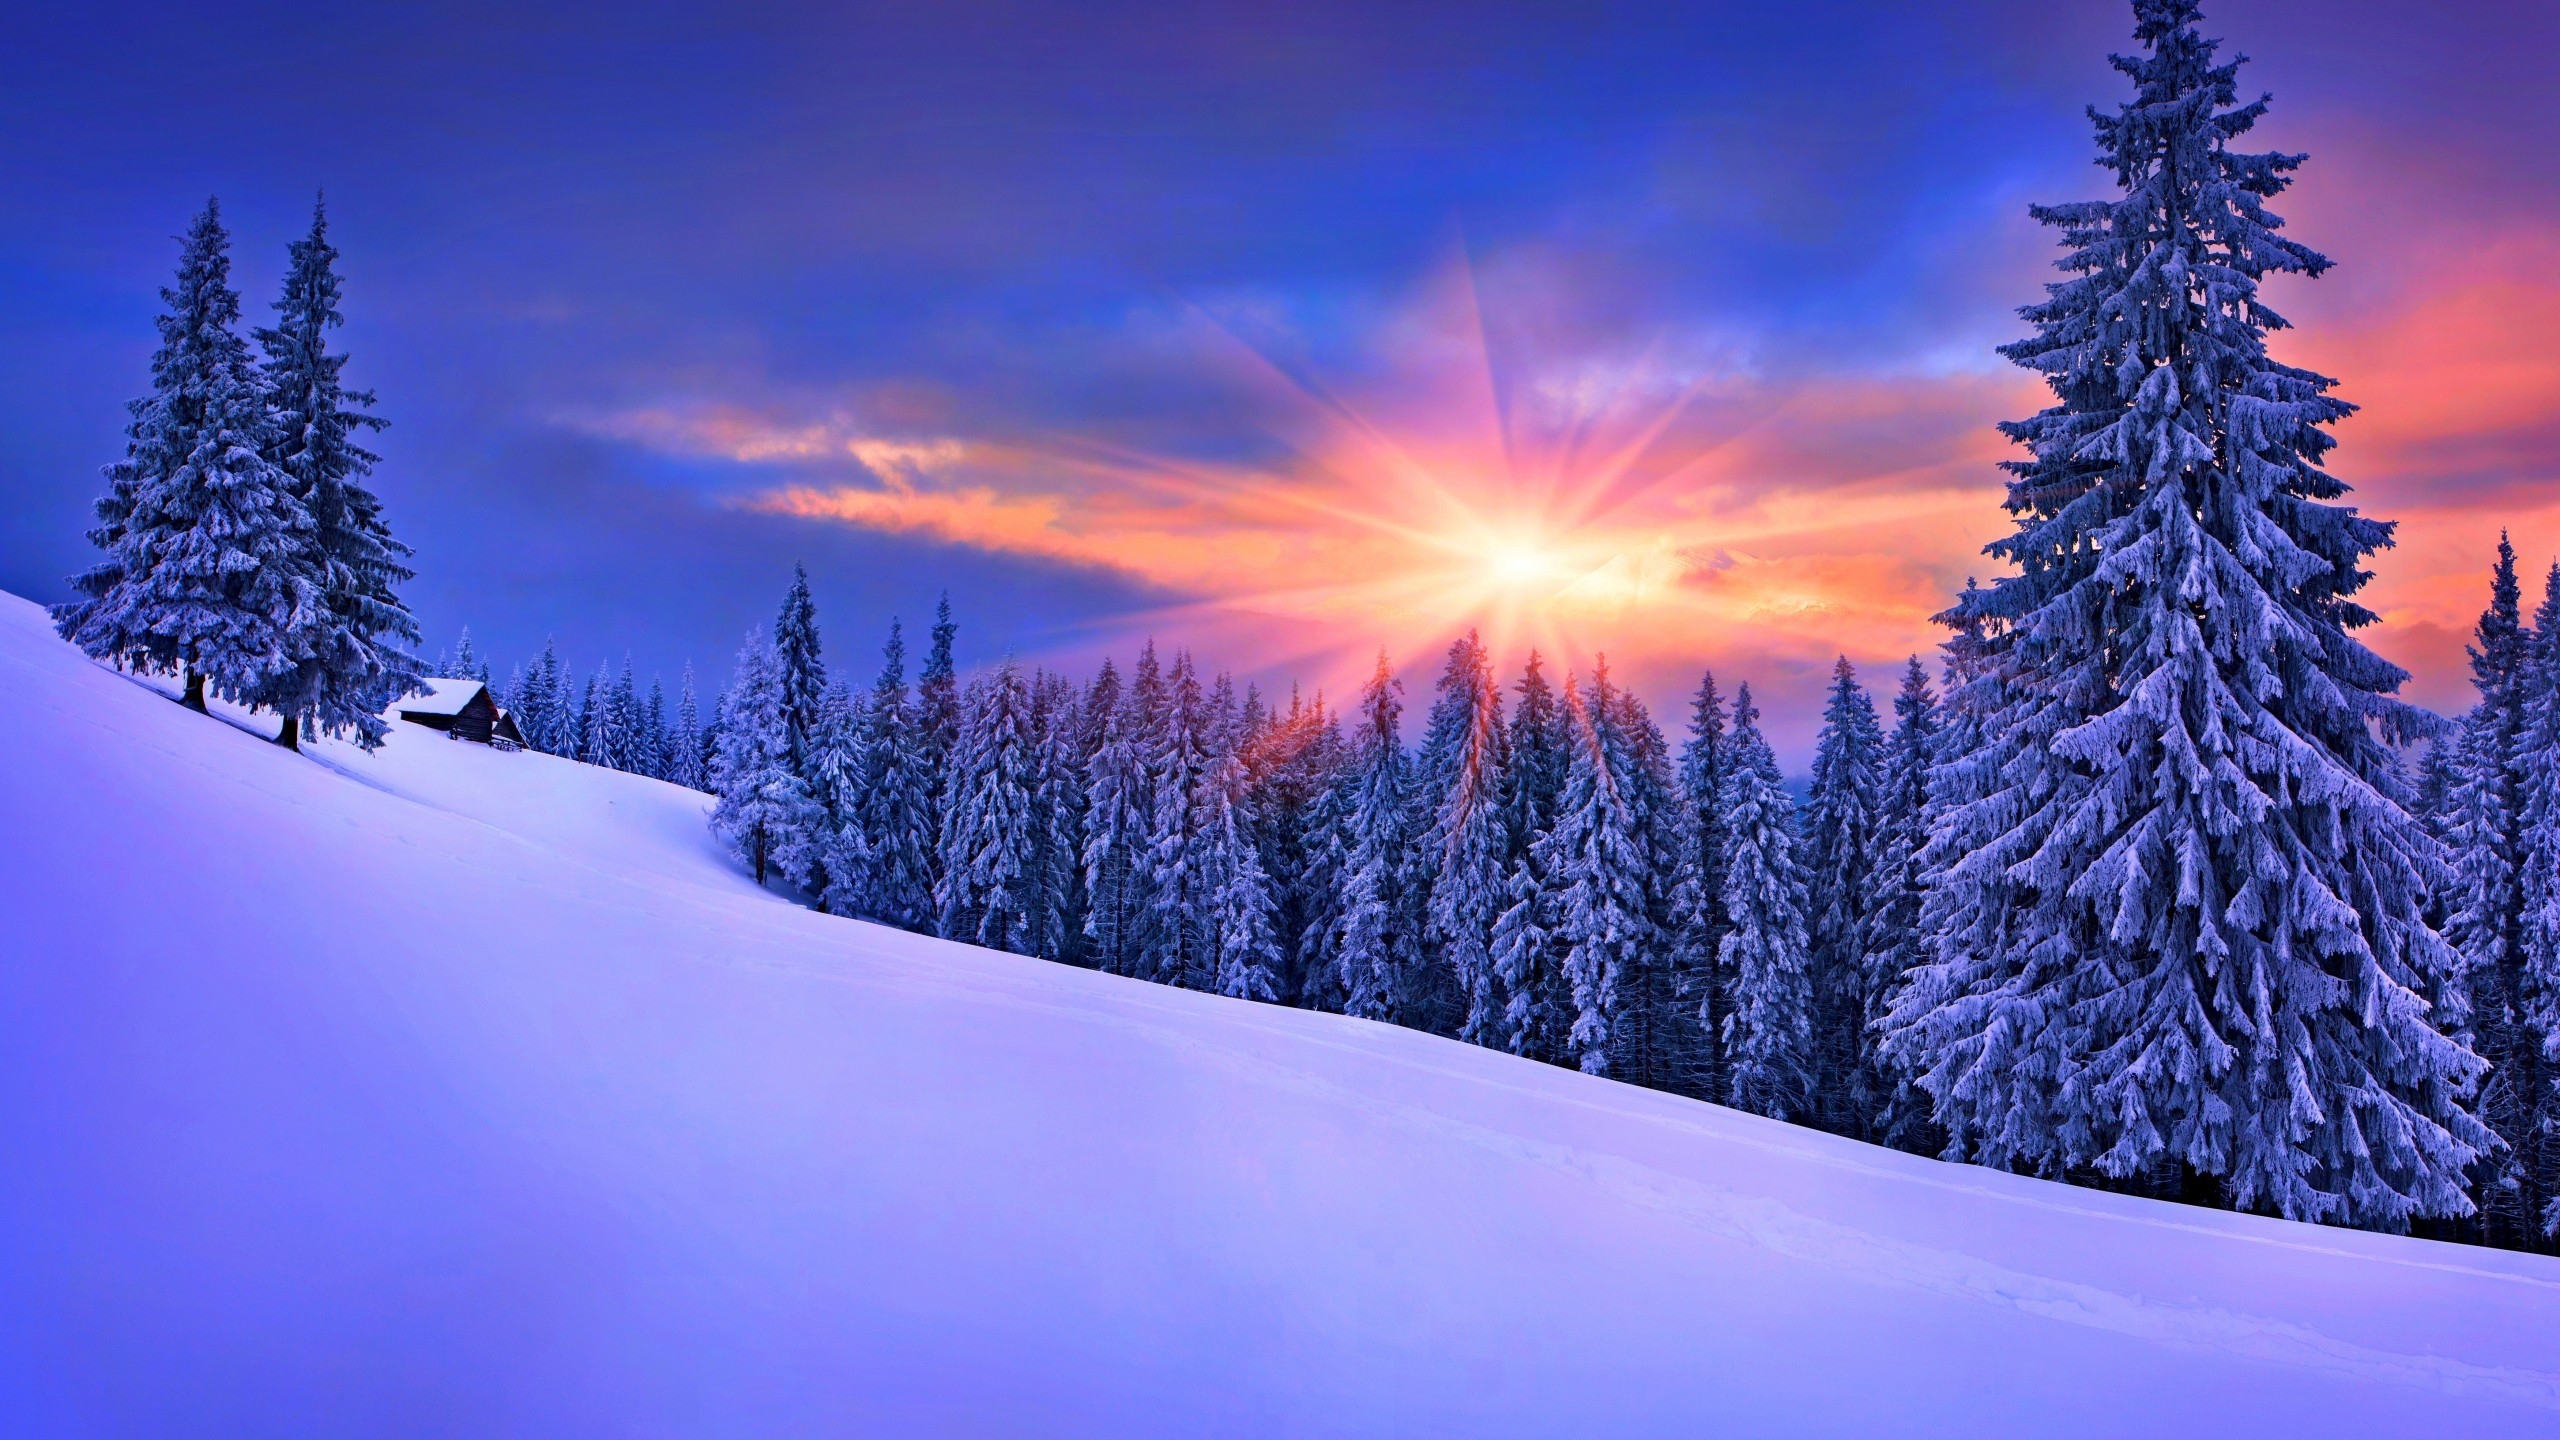 Late Winter Sunset for 2560x1440 HDTV resolution